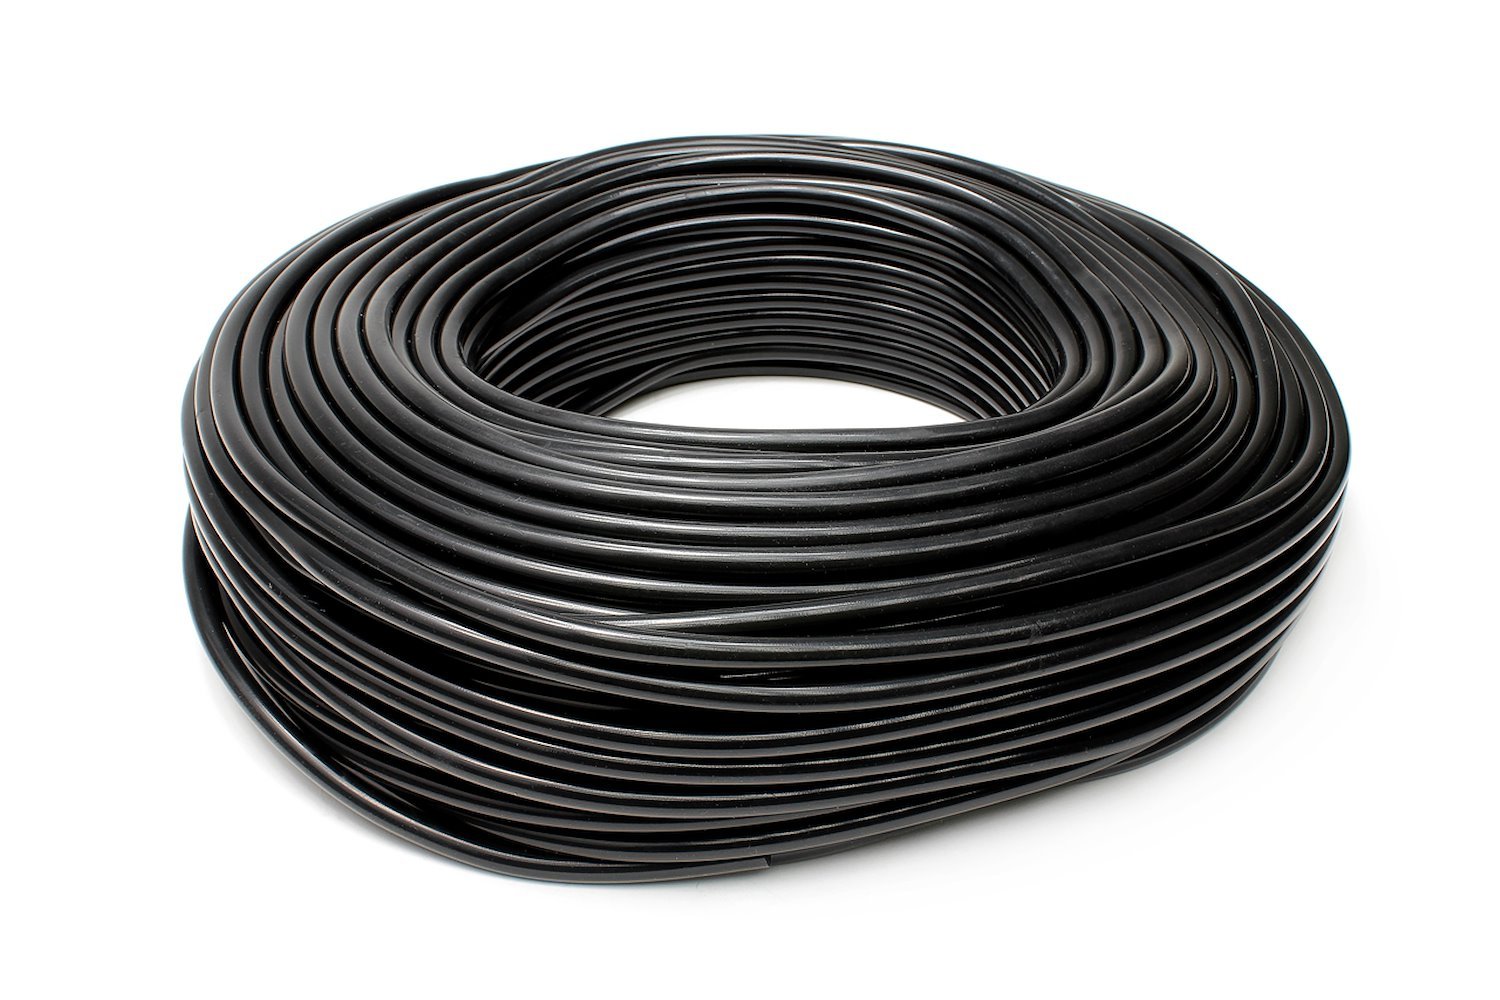 HTSVH3TW-BLKx50 High-Temperature Silicone Vacuum Hose Tubing, 1/8 in. ID, 50 ft. Roll, Black